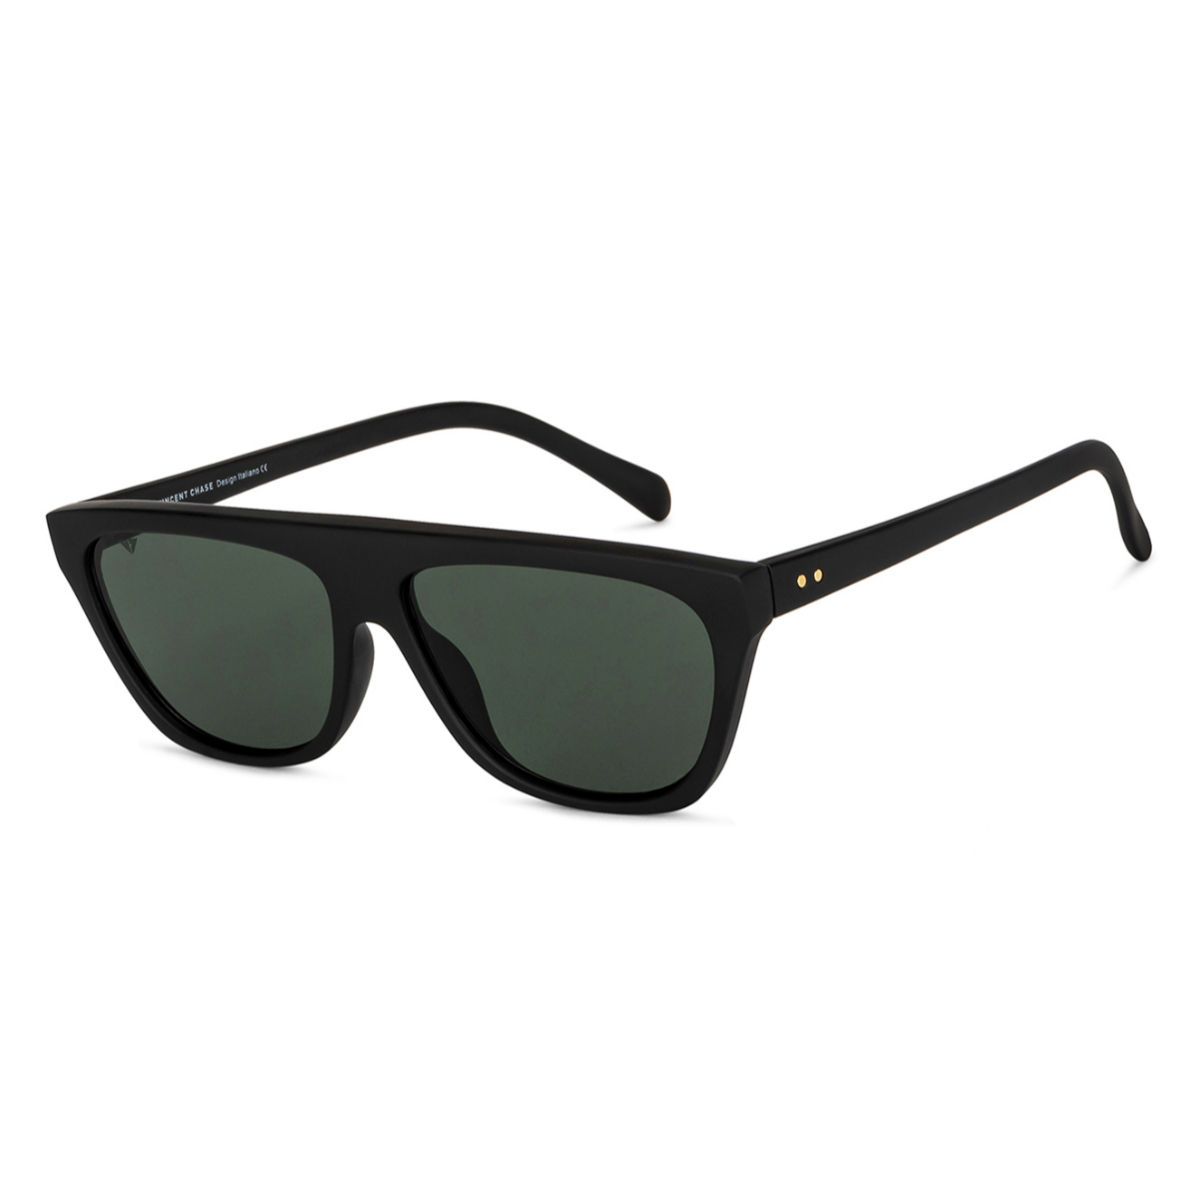 Green Club Master Full Rim Unisex Sunglasses by Vincent Chase  Polarized-151128 – Lenskart